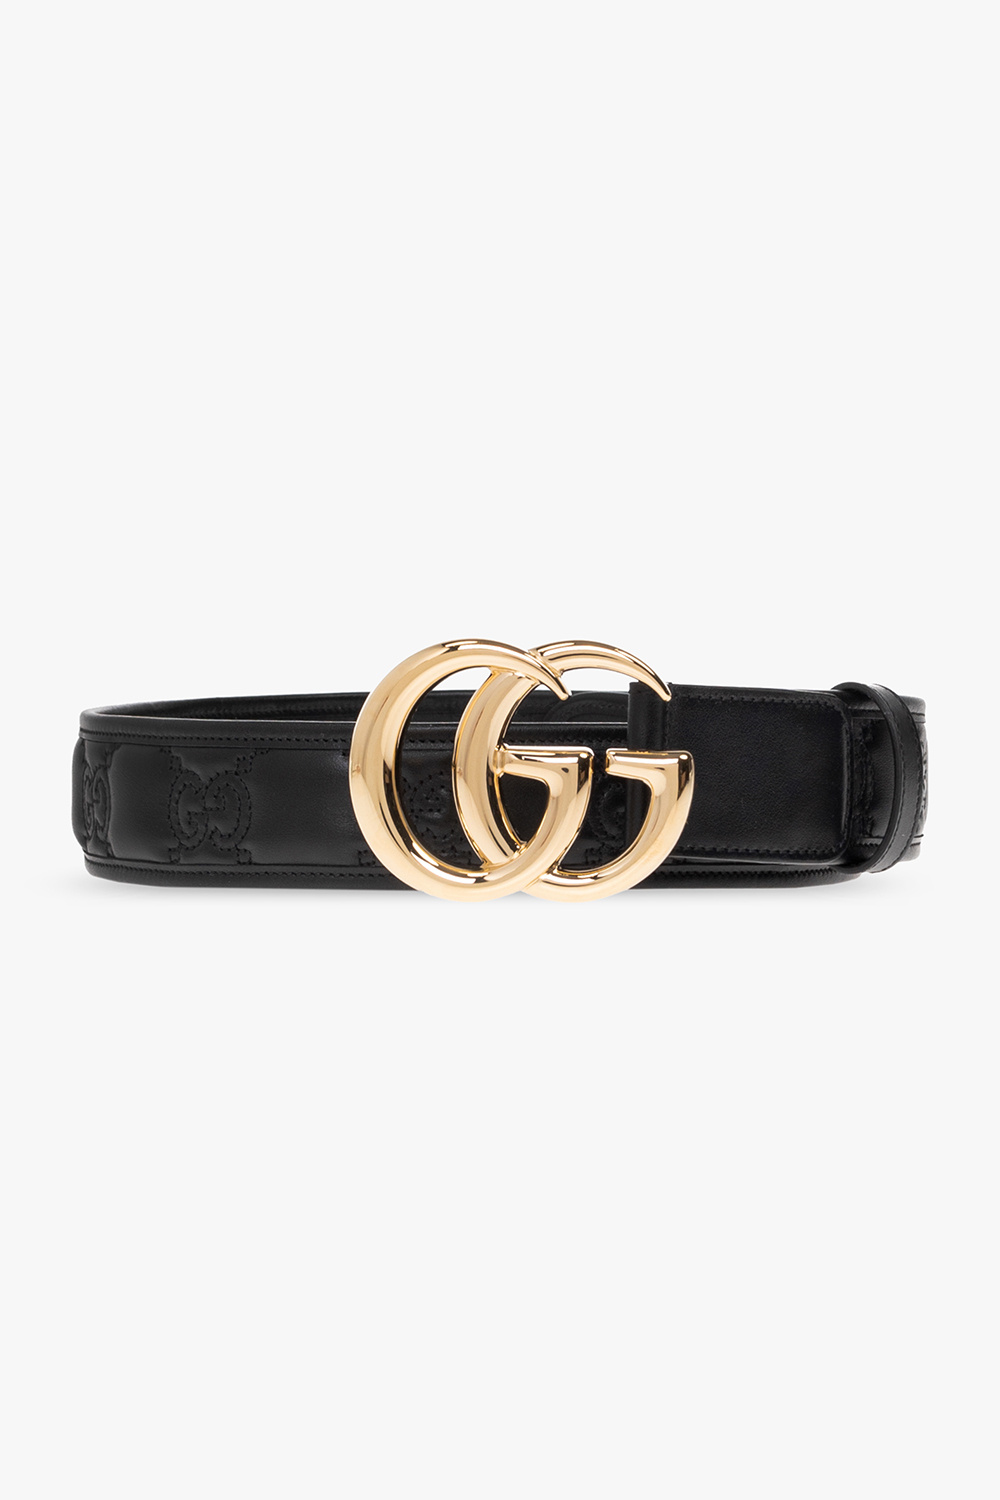 Gucci lined G belt 400593 80 CM BLACK LEATHER BLACK GG BUCKLE